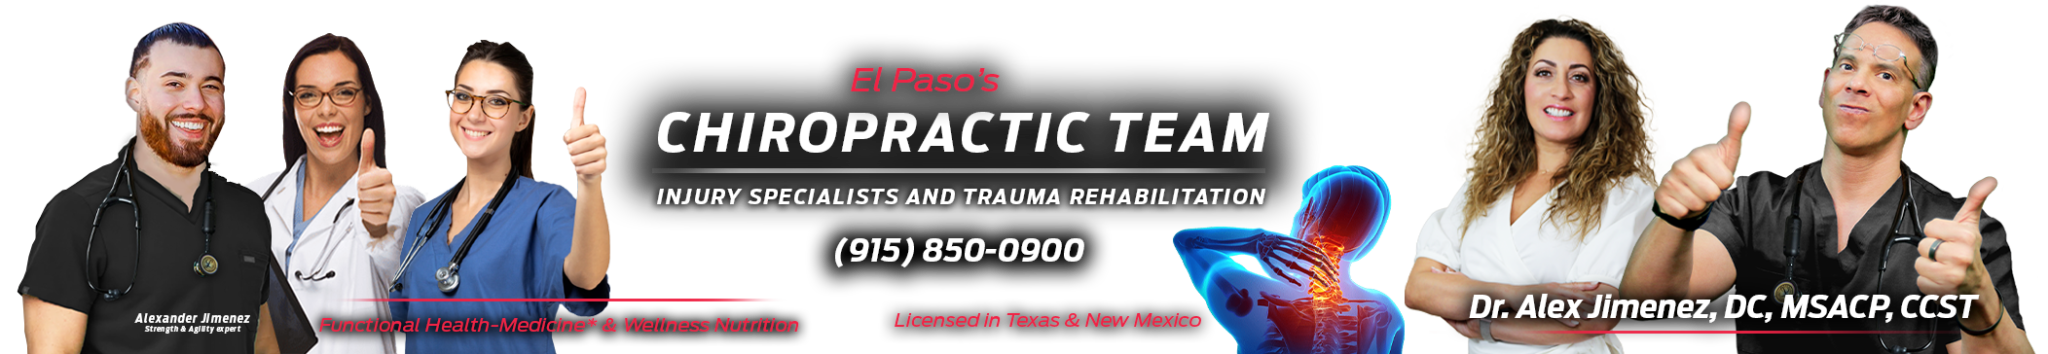 PushAsRx Athletic Training Centers El Paso, TX